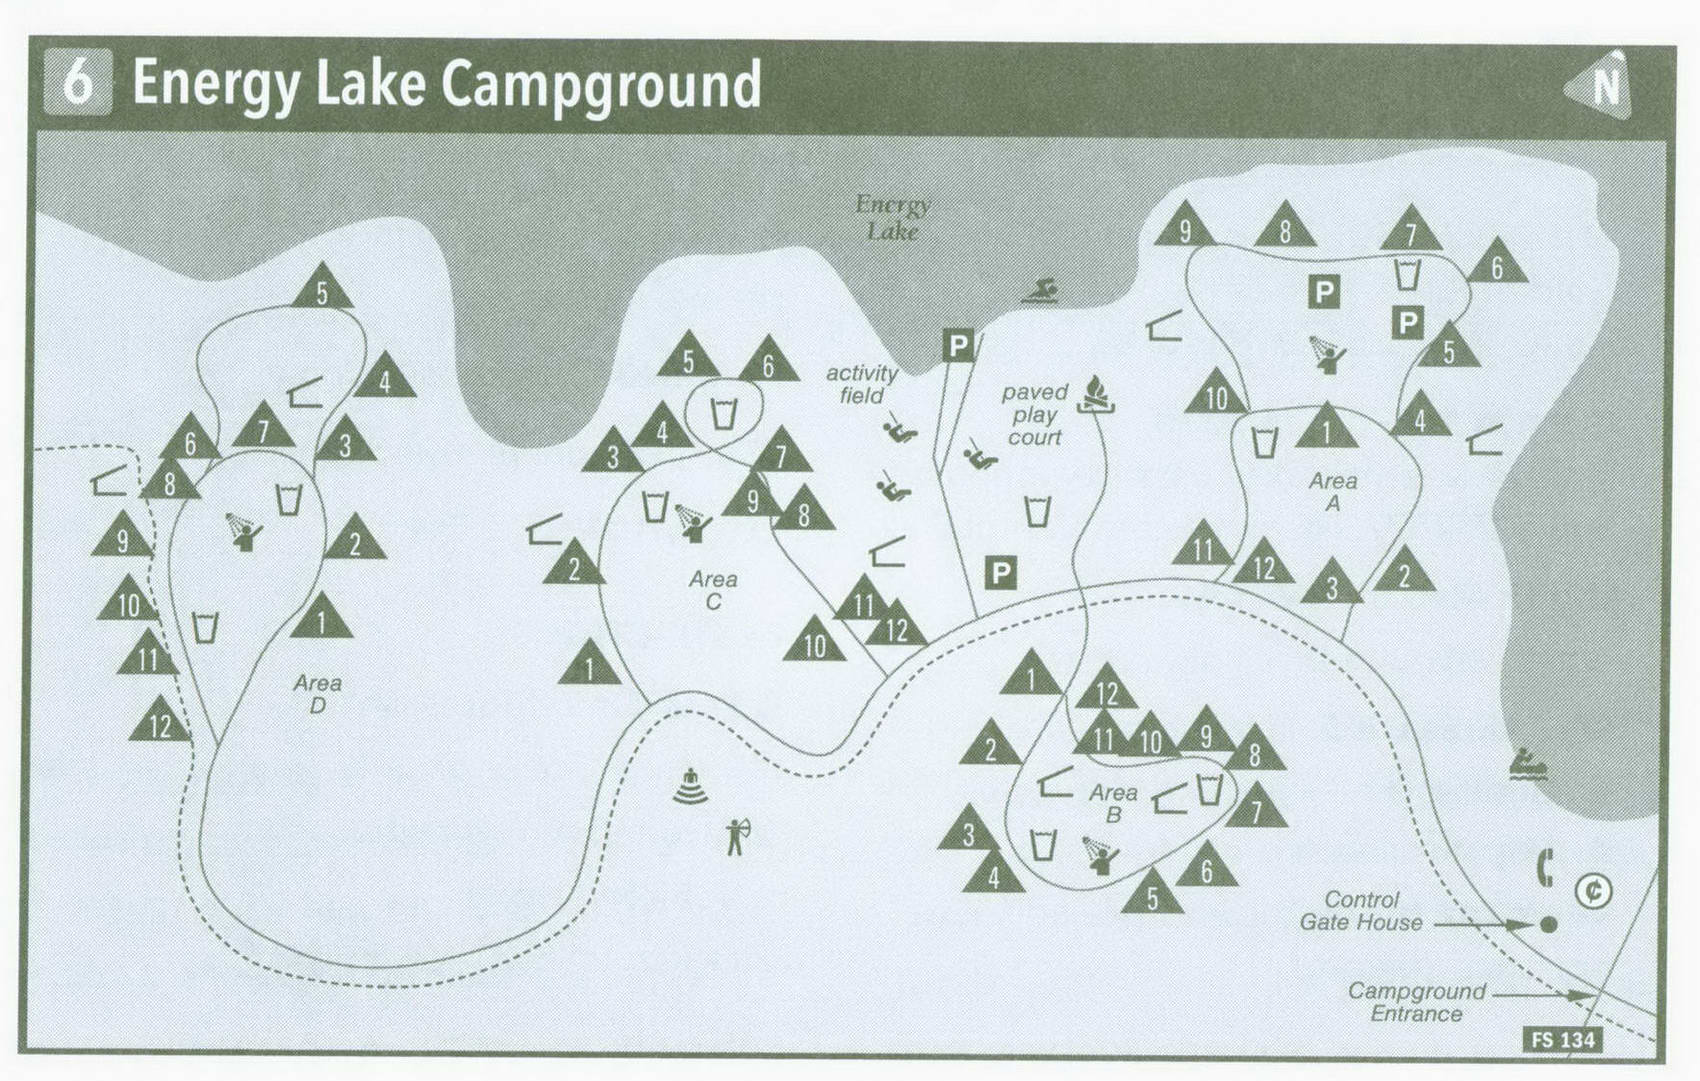 Plan of Energy Lake Campground